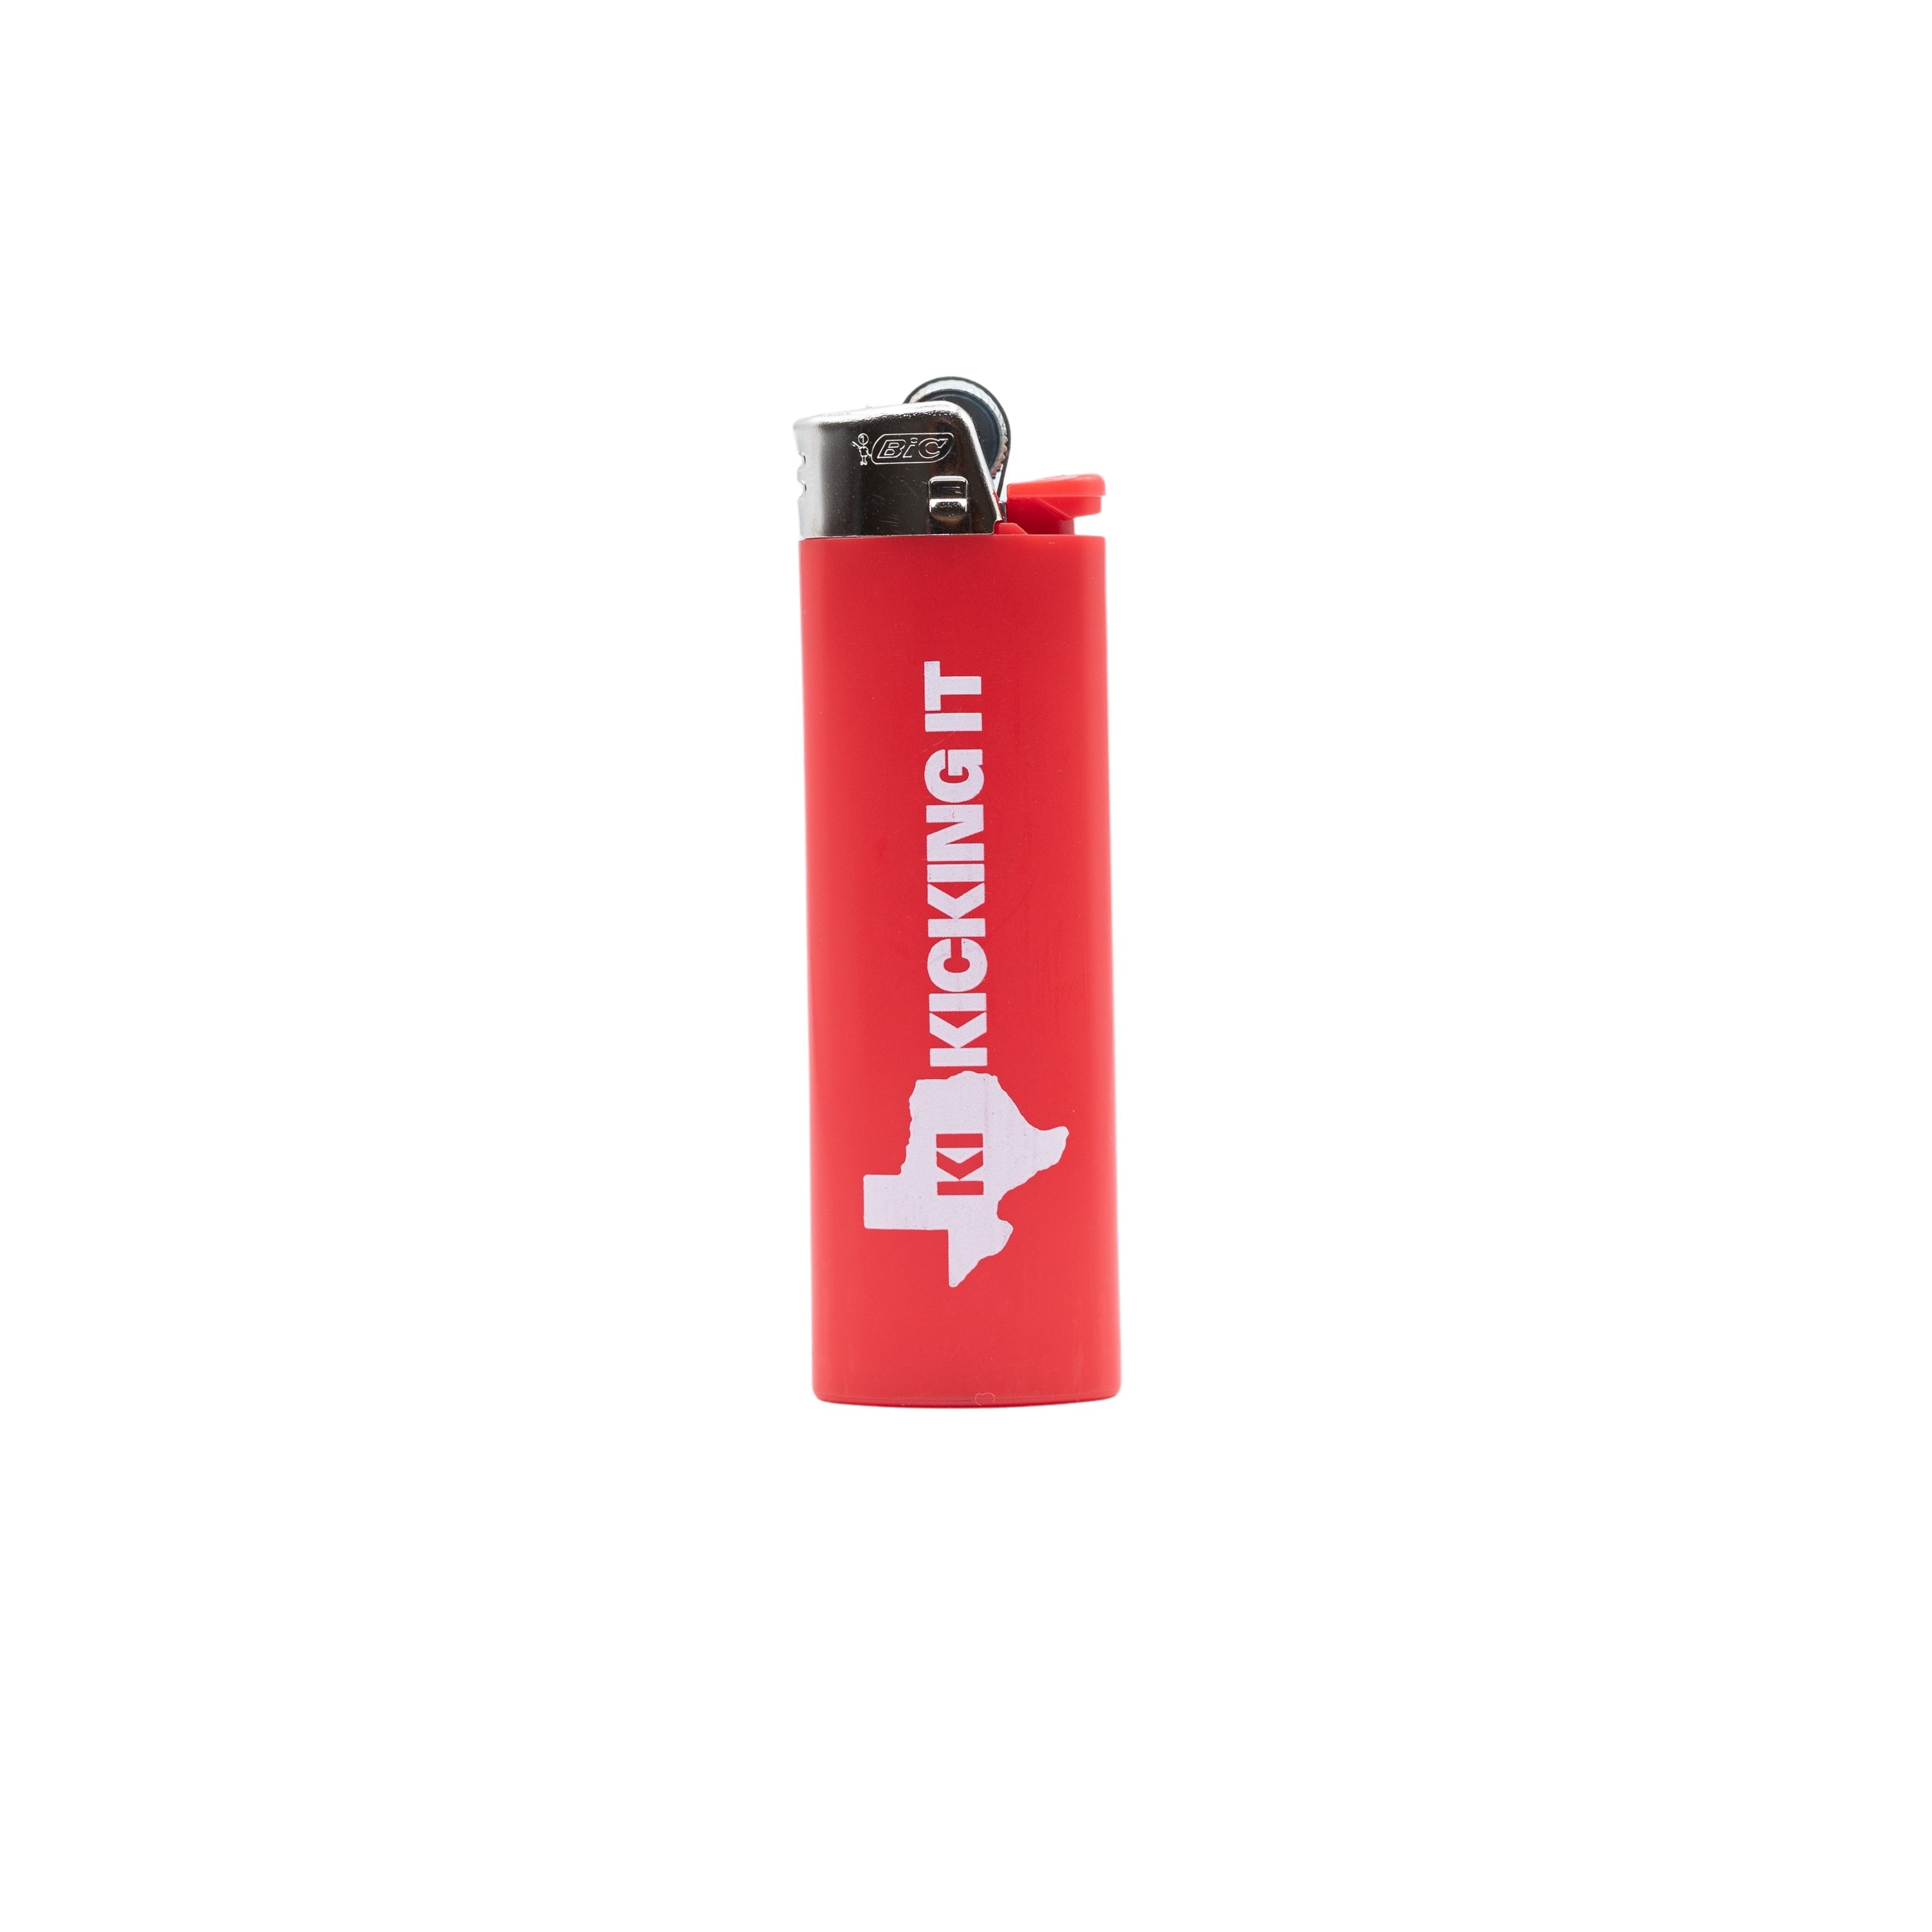 Red KI Bic Lighter (Texas)